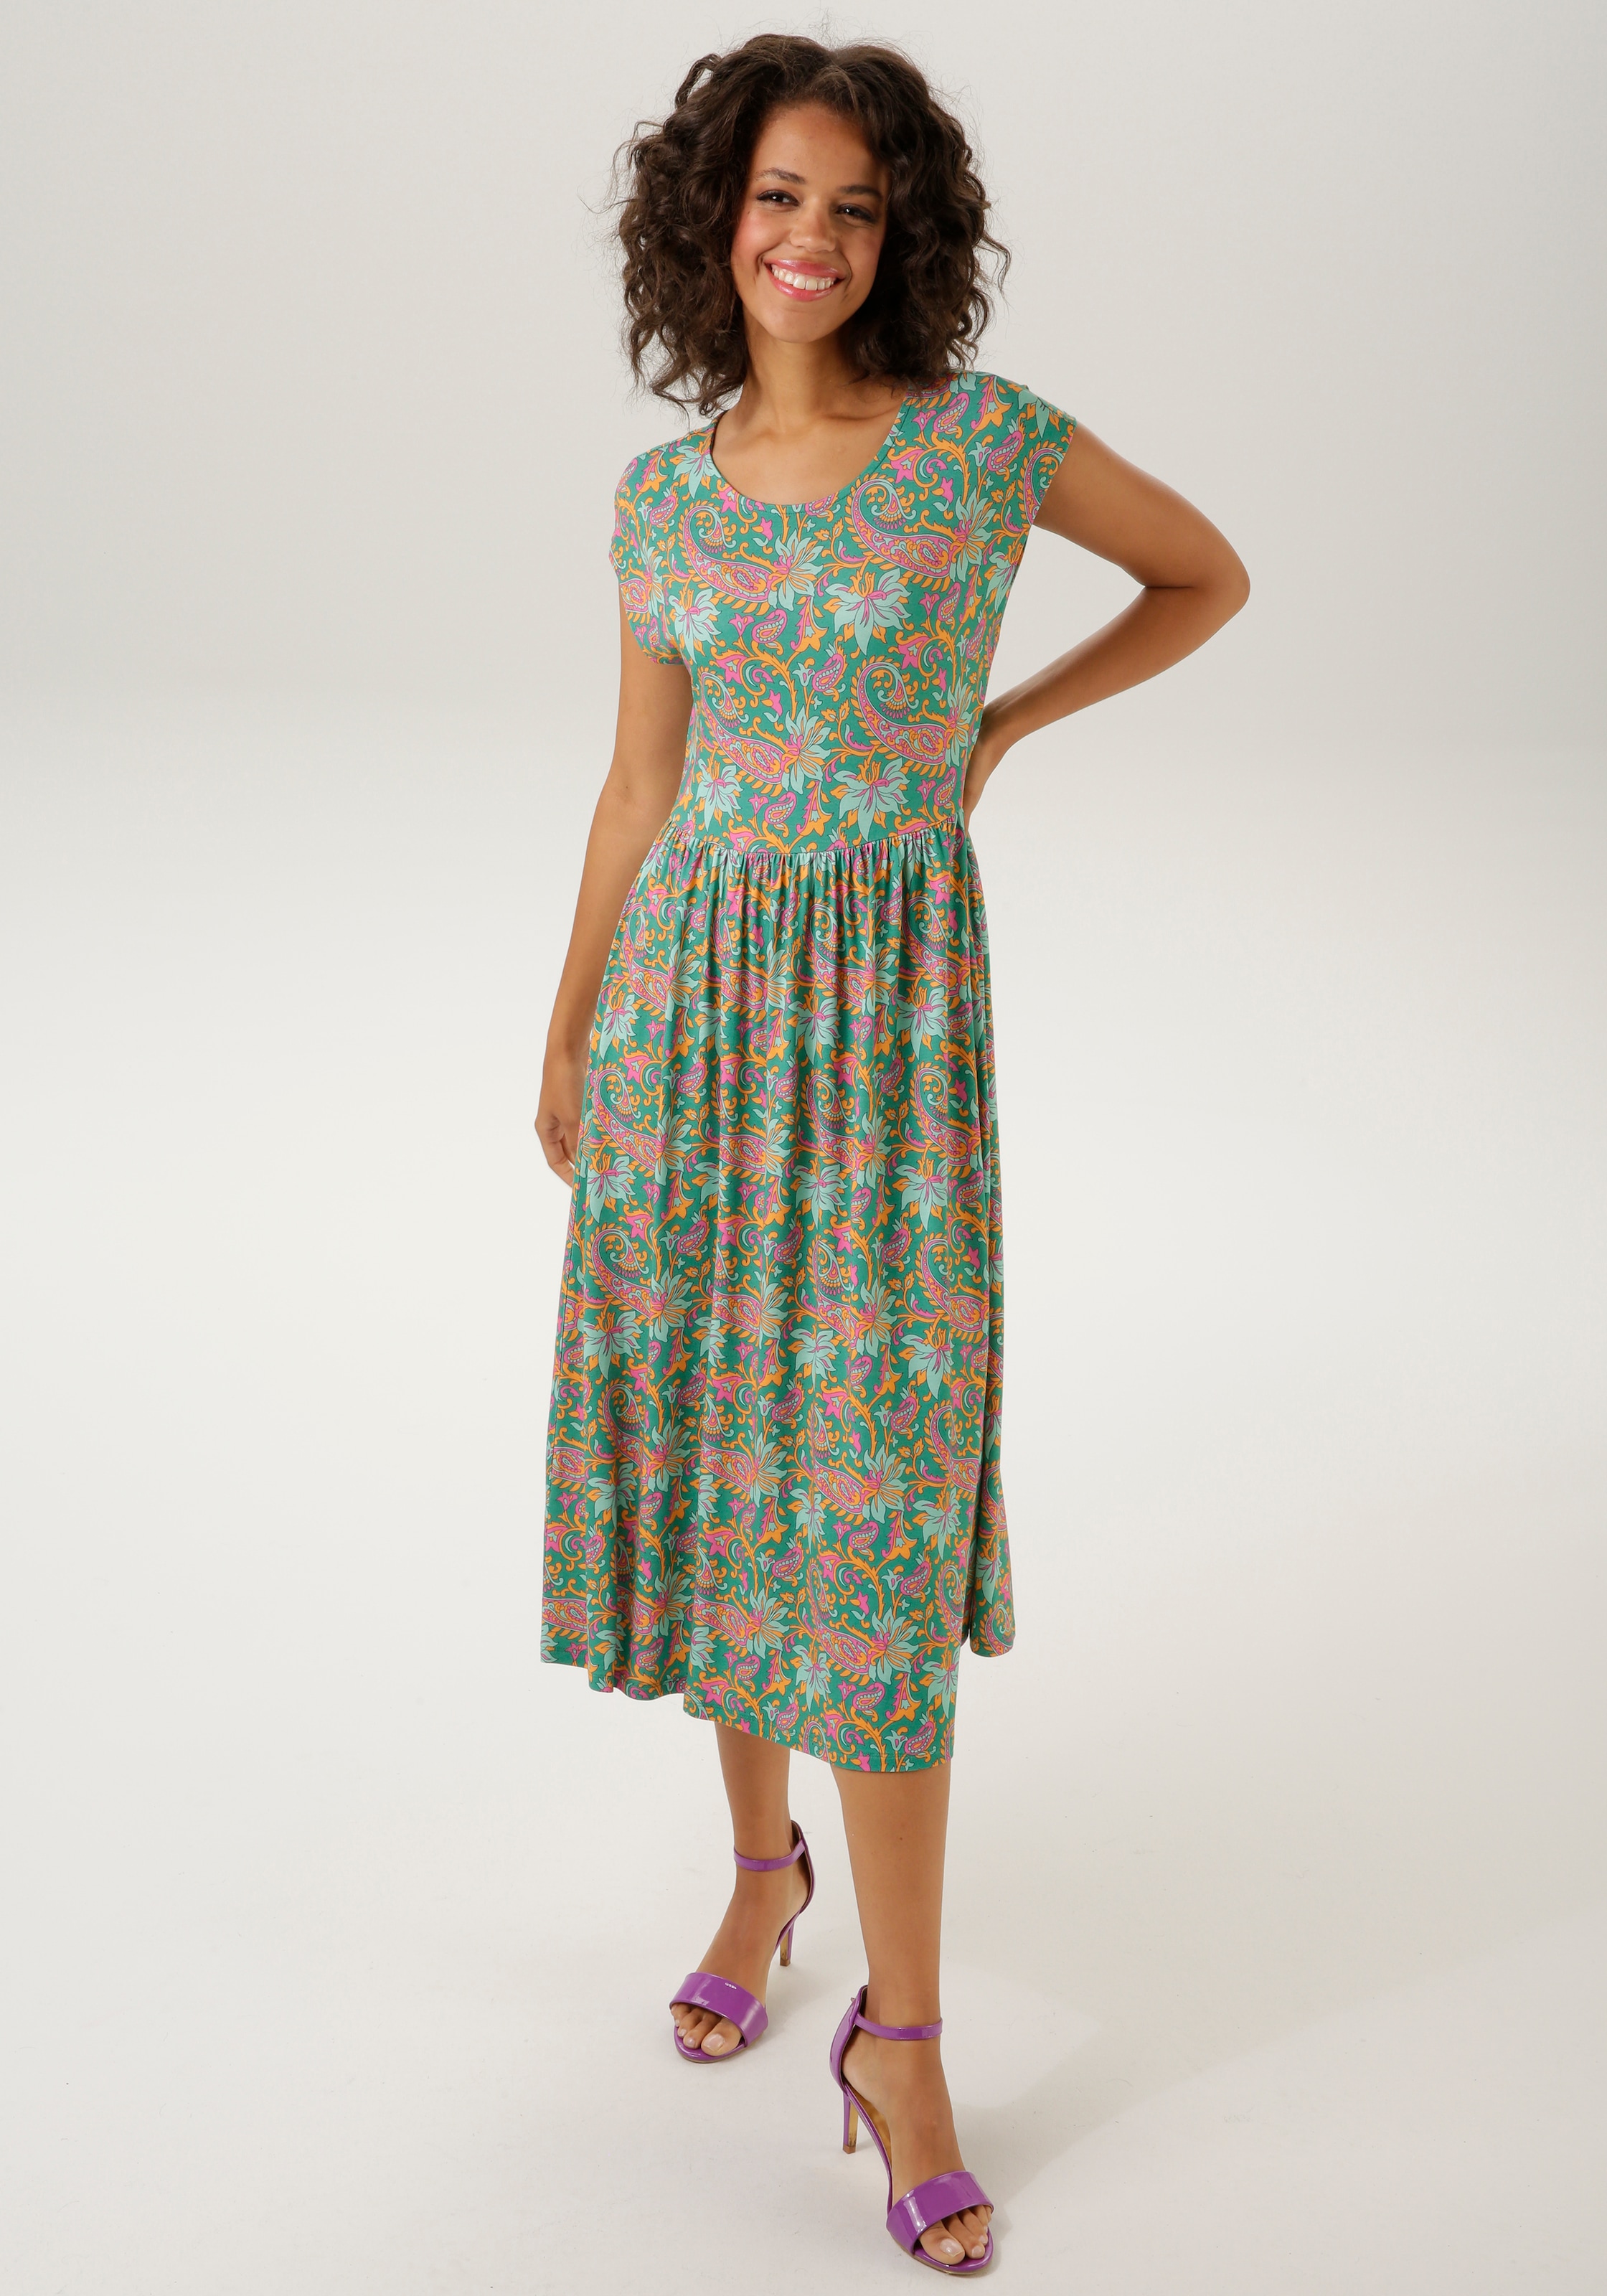 Sommerkleid, mit extravagantem Paisley-Muster bedruckt